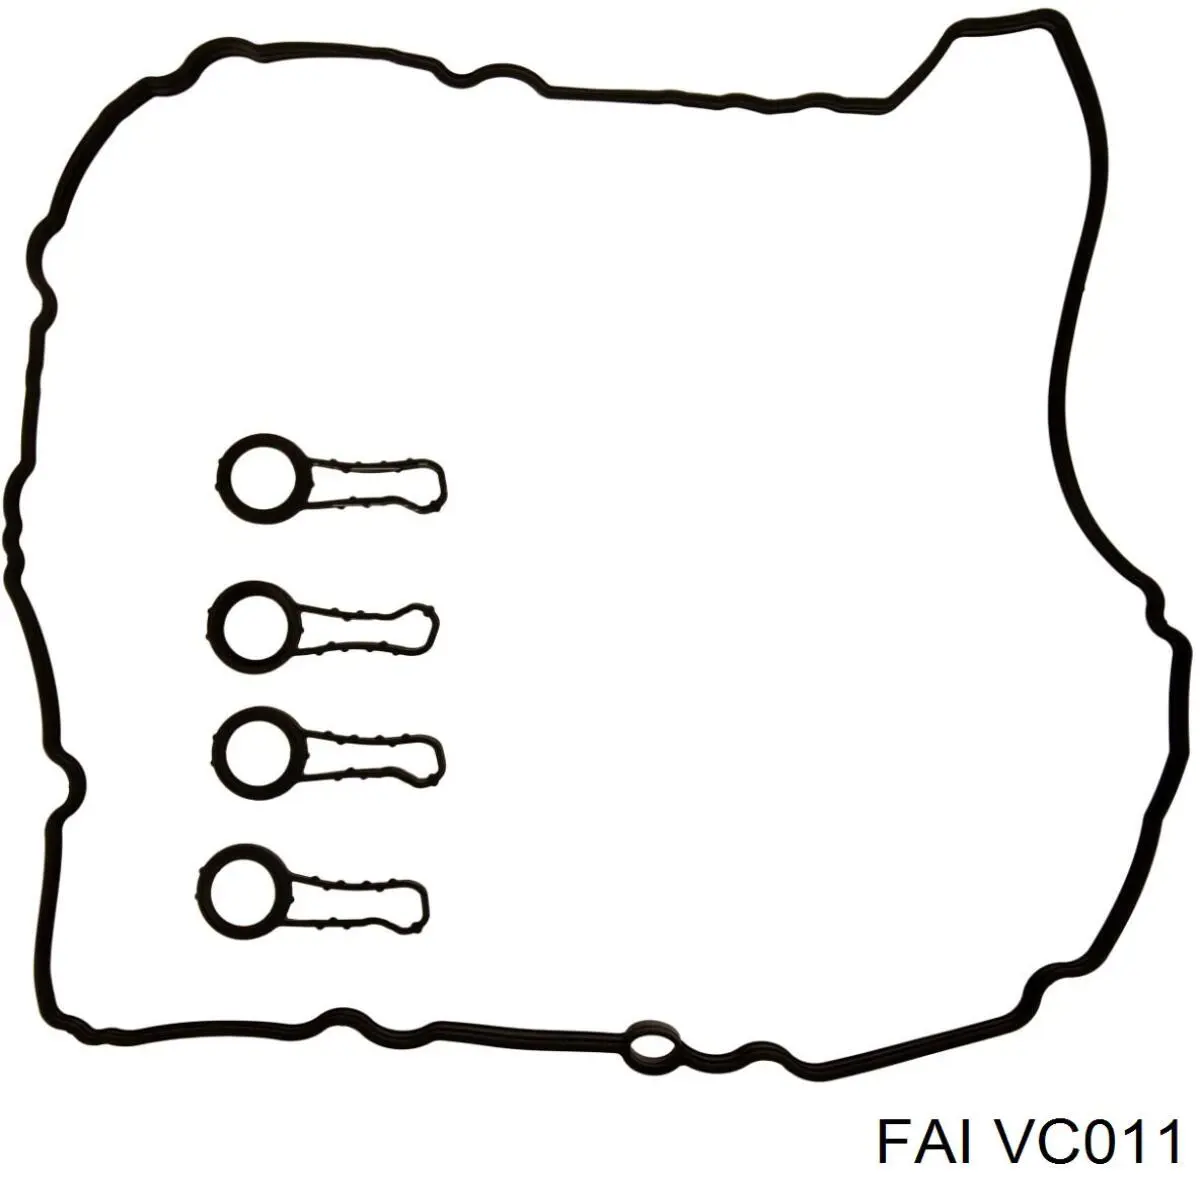 VC011 FAI membrana del separador de aceite